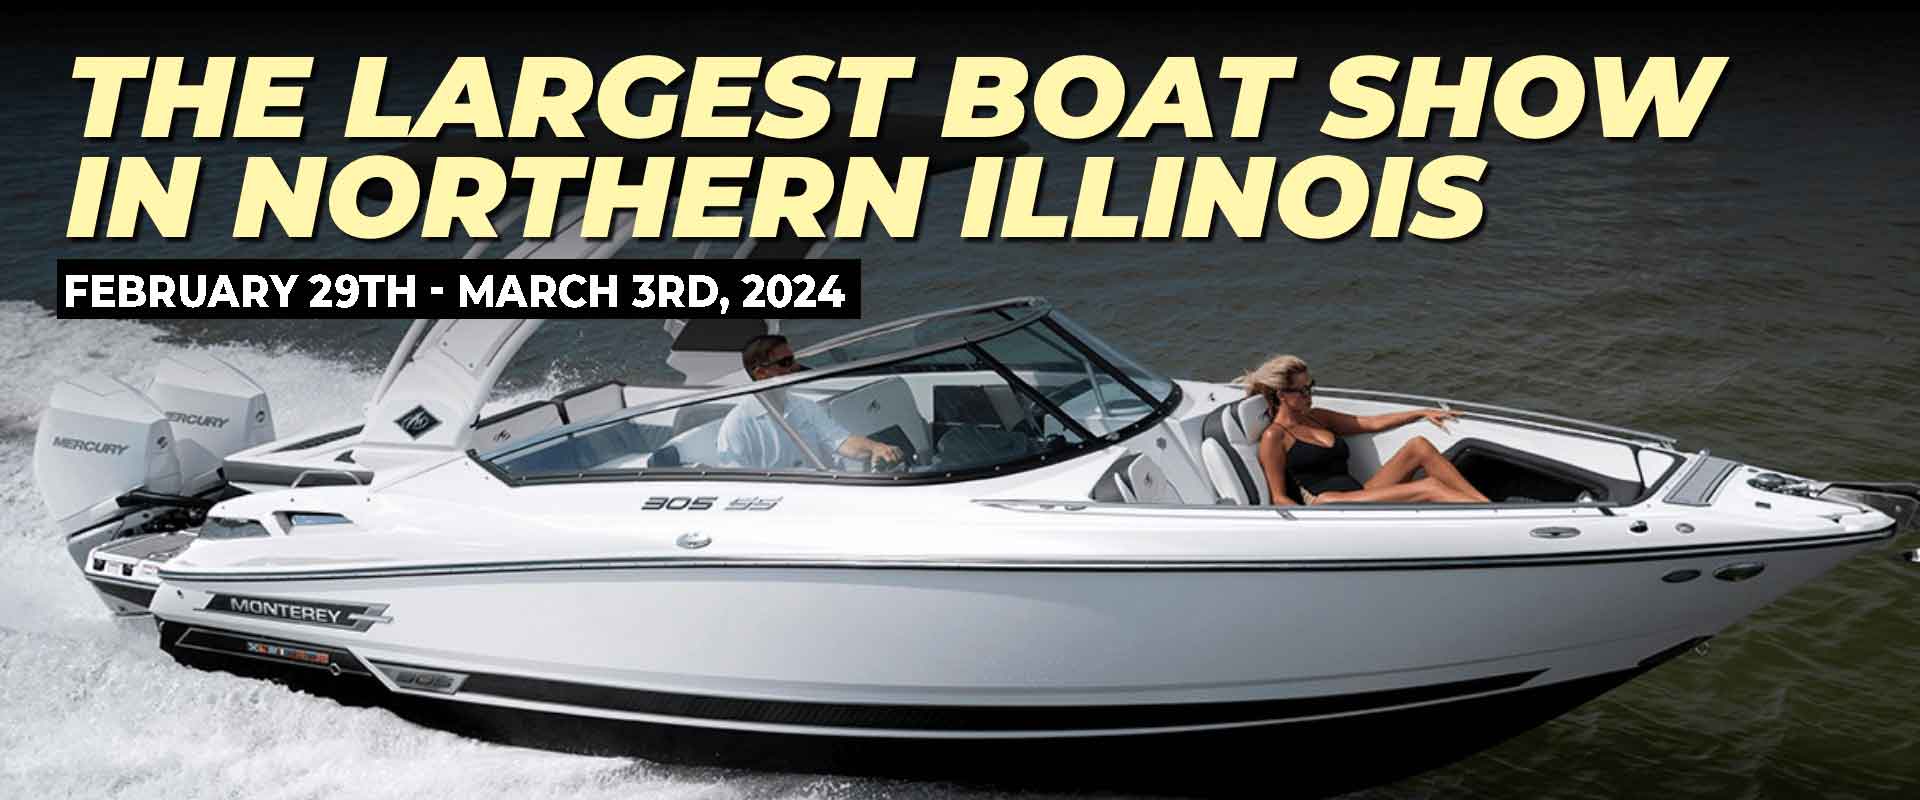 Northern Illinois #1 Boat Show & Sale